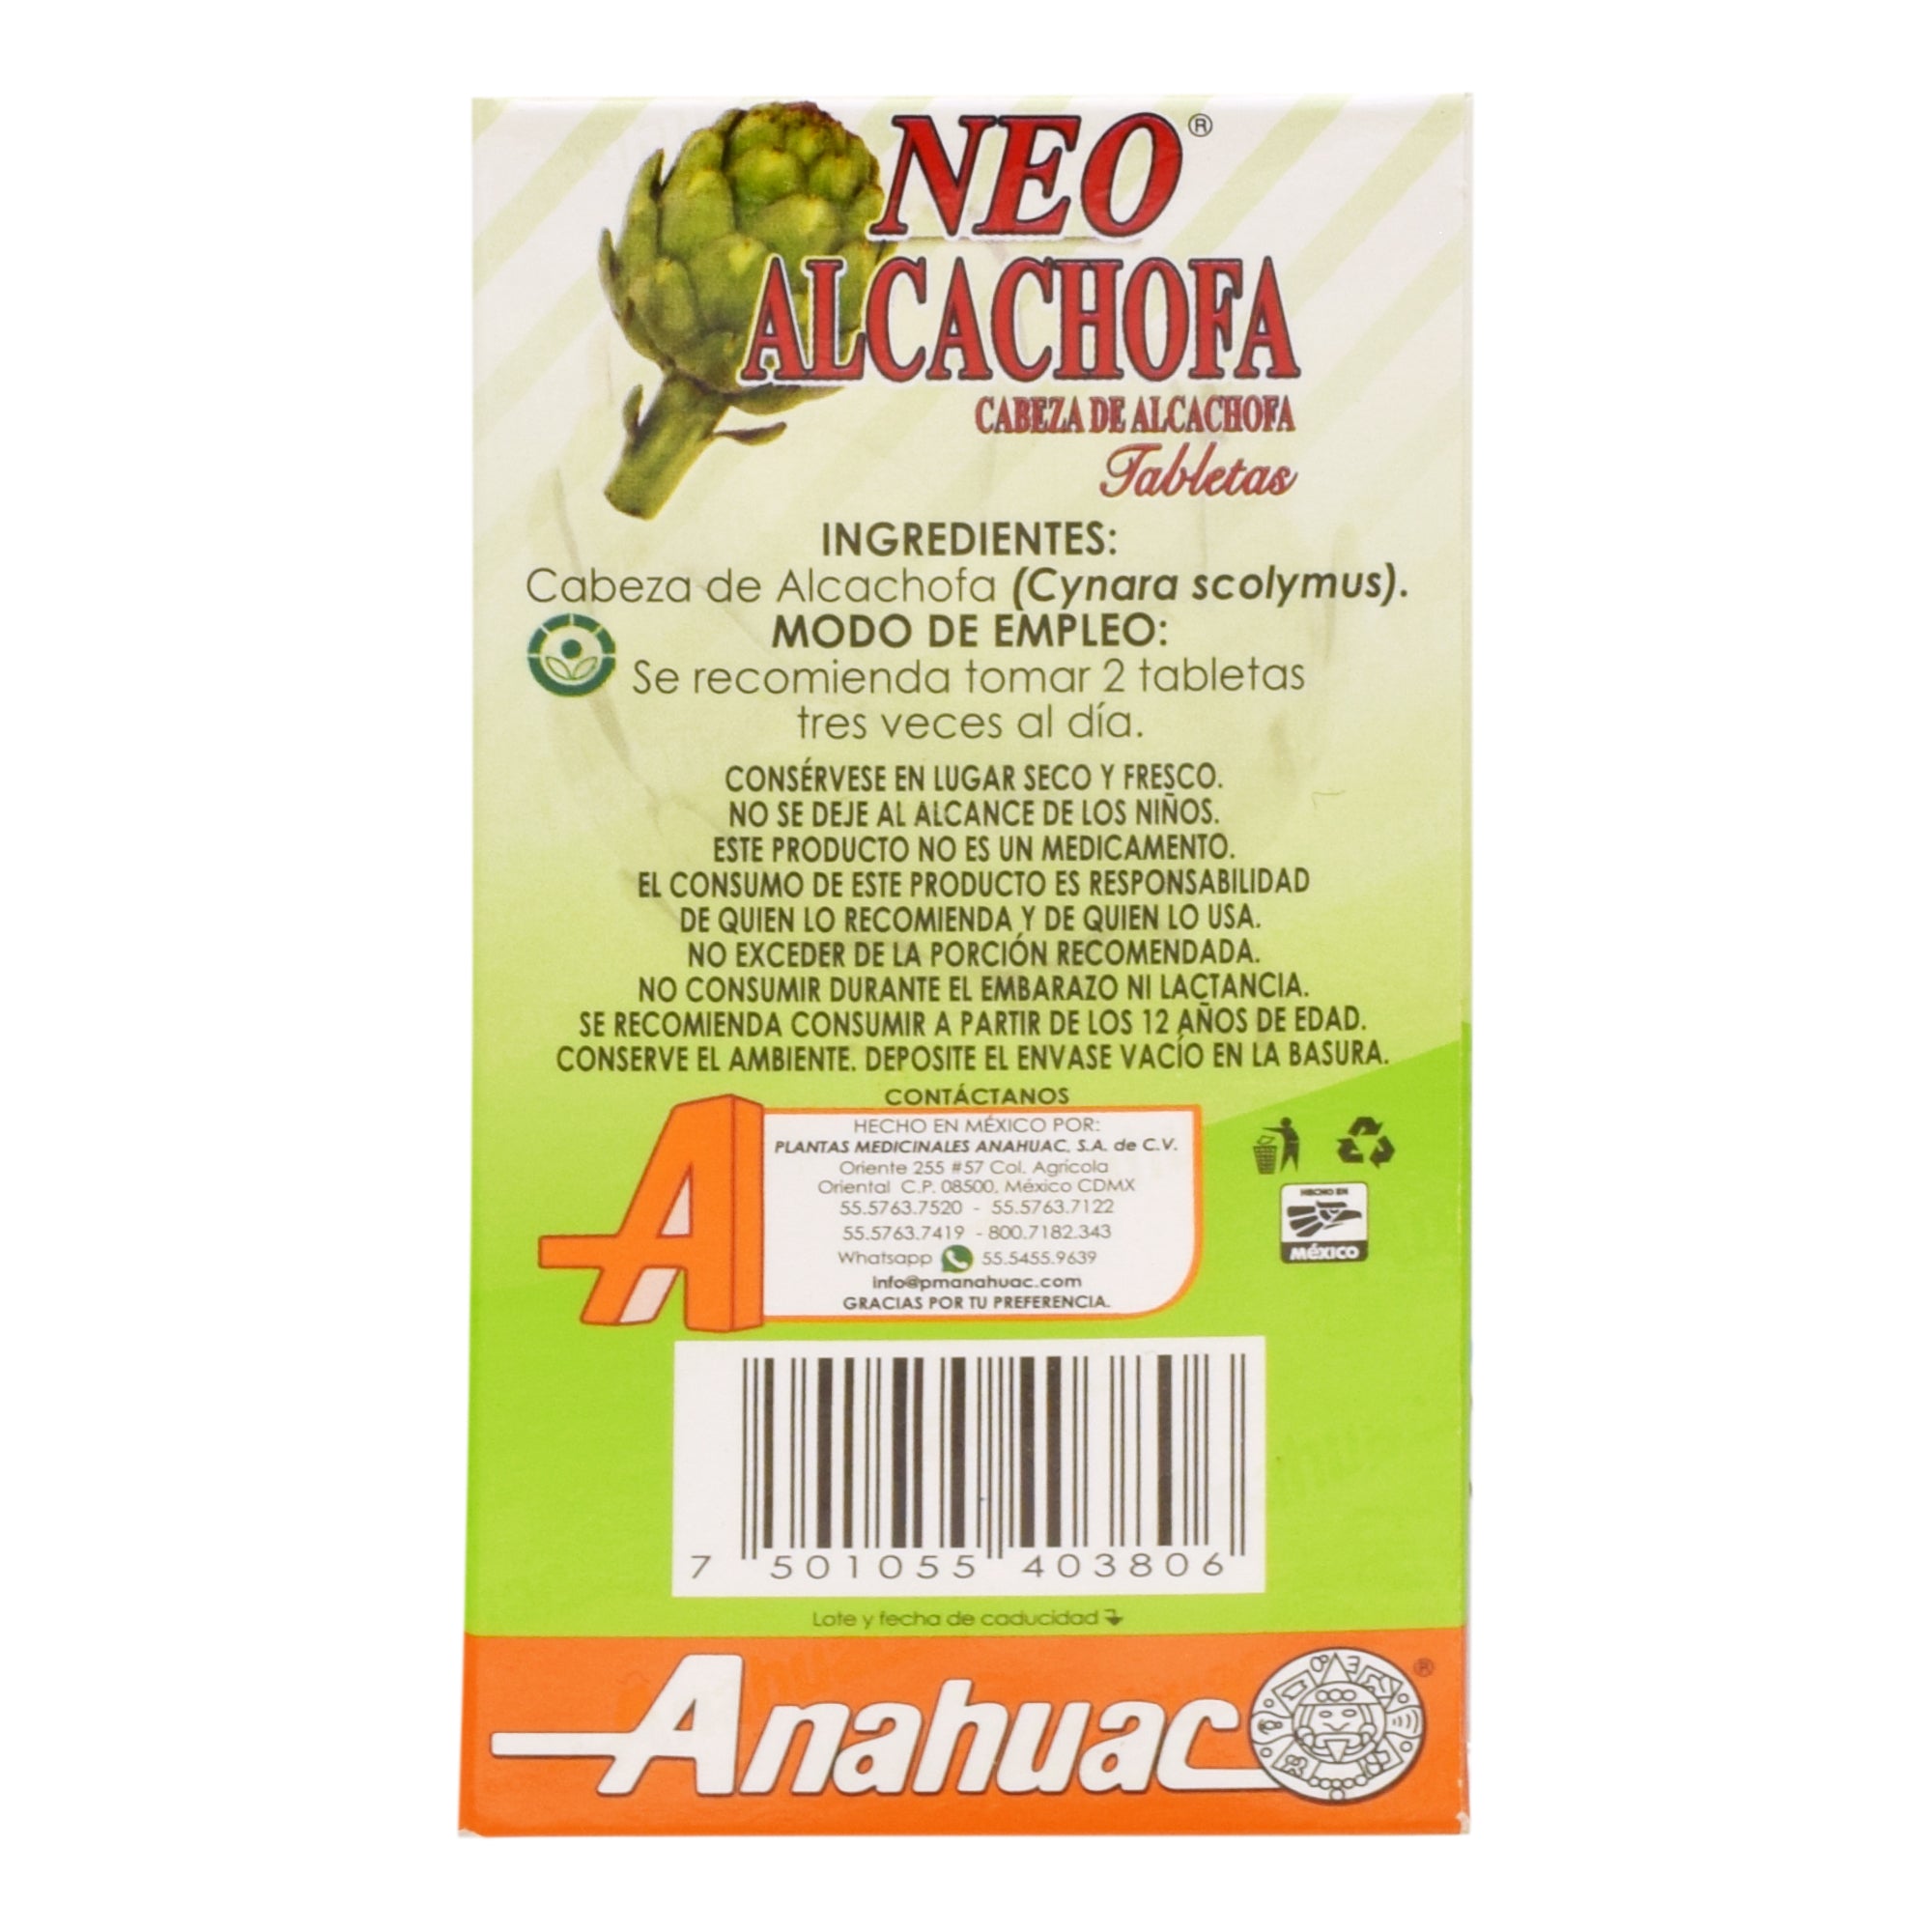 Neo Alcachofa 120 Tab